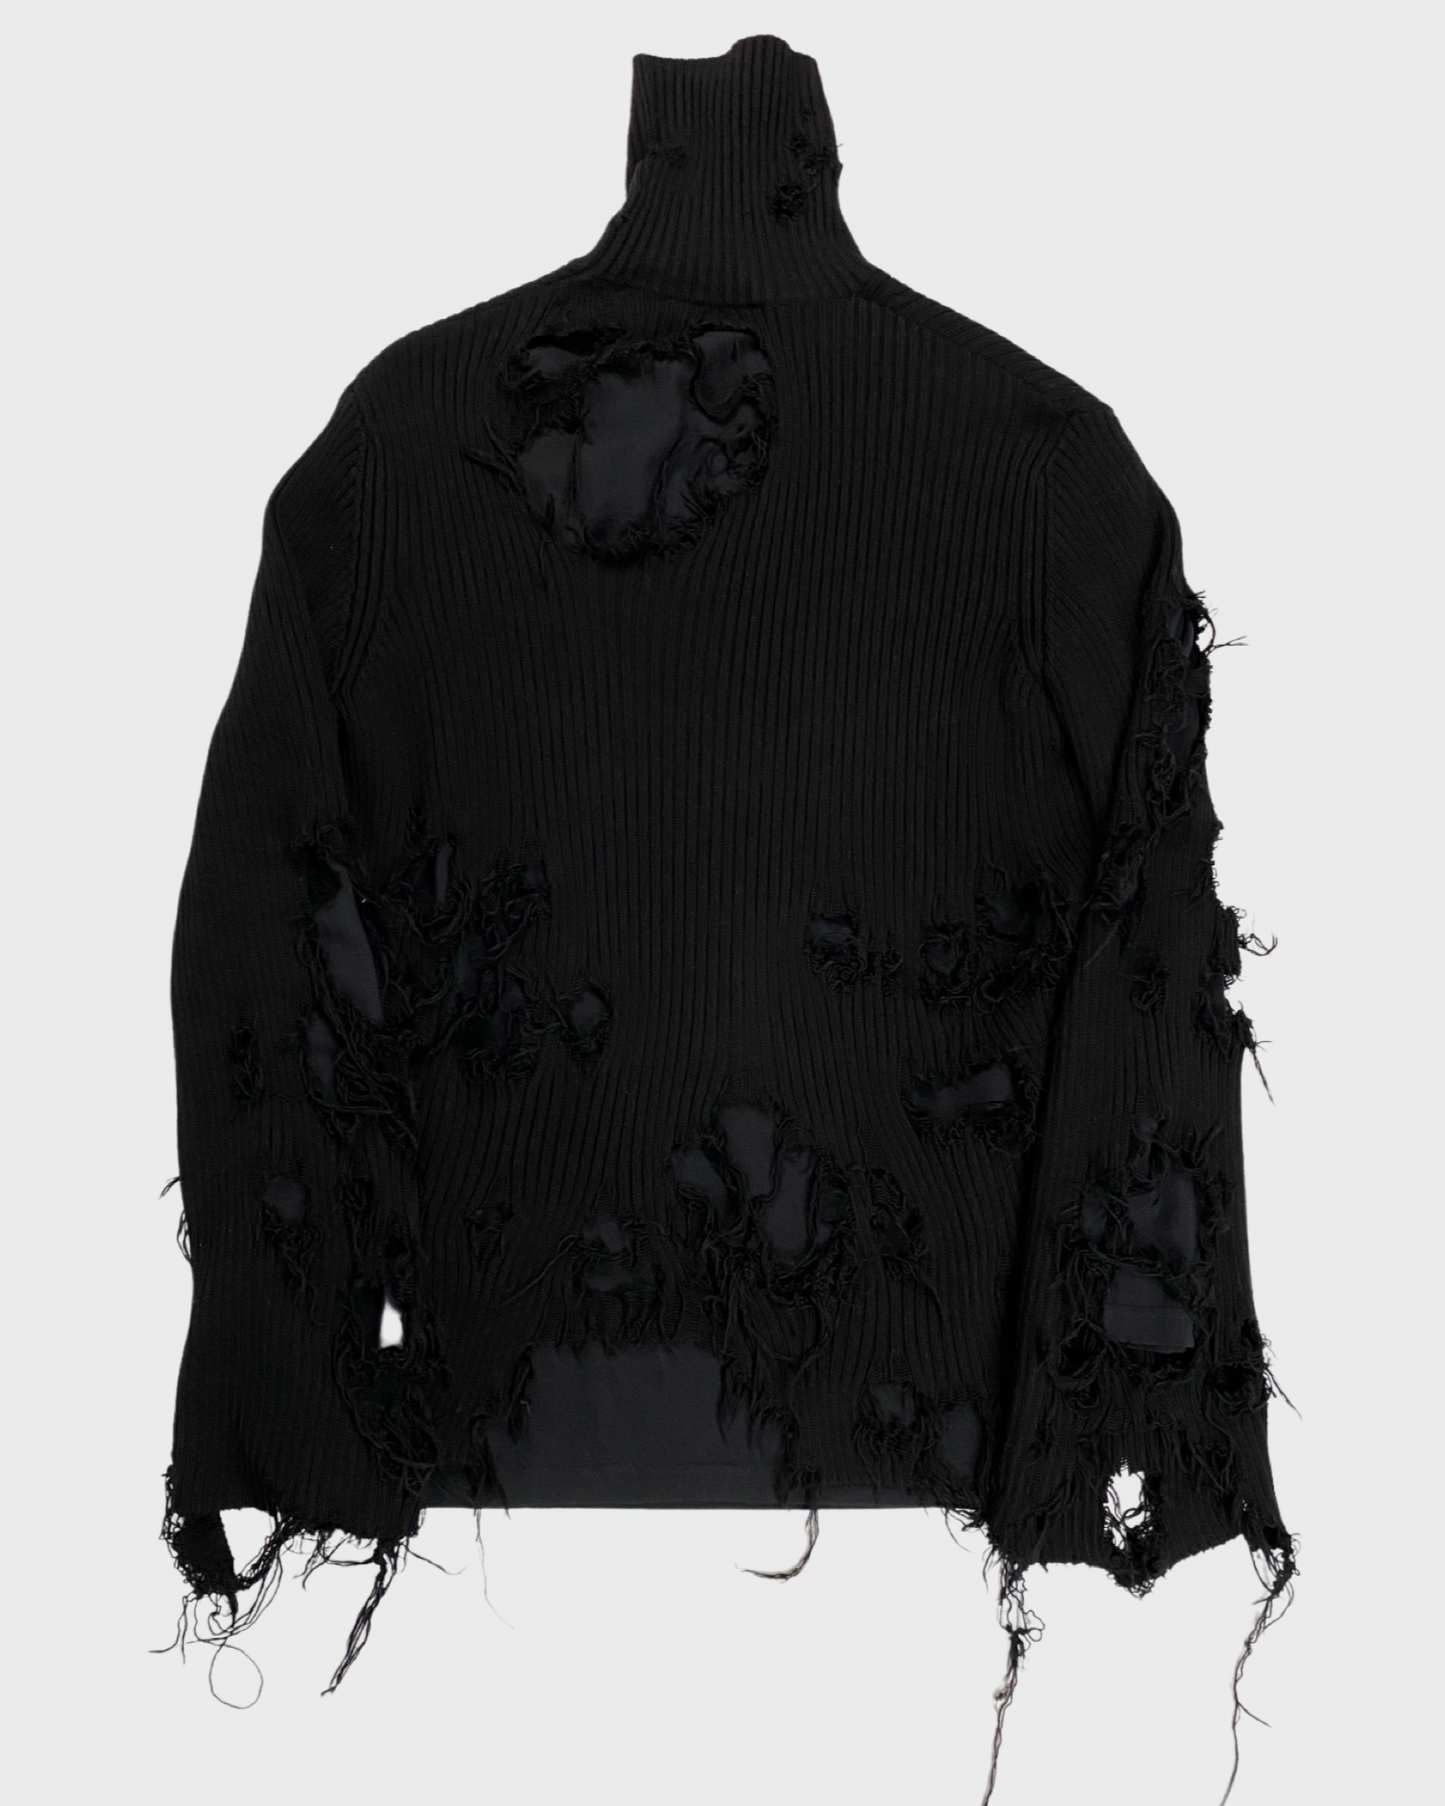 Balenciaga destroyed layered turtle kneck sweater SZ:XS|S